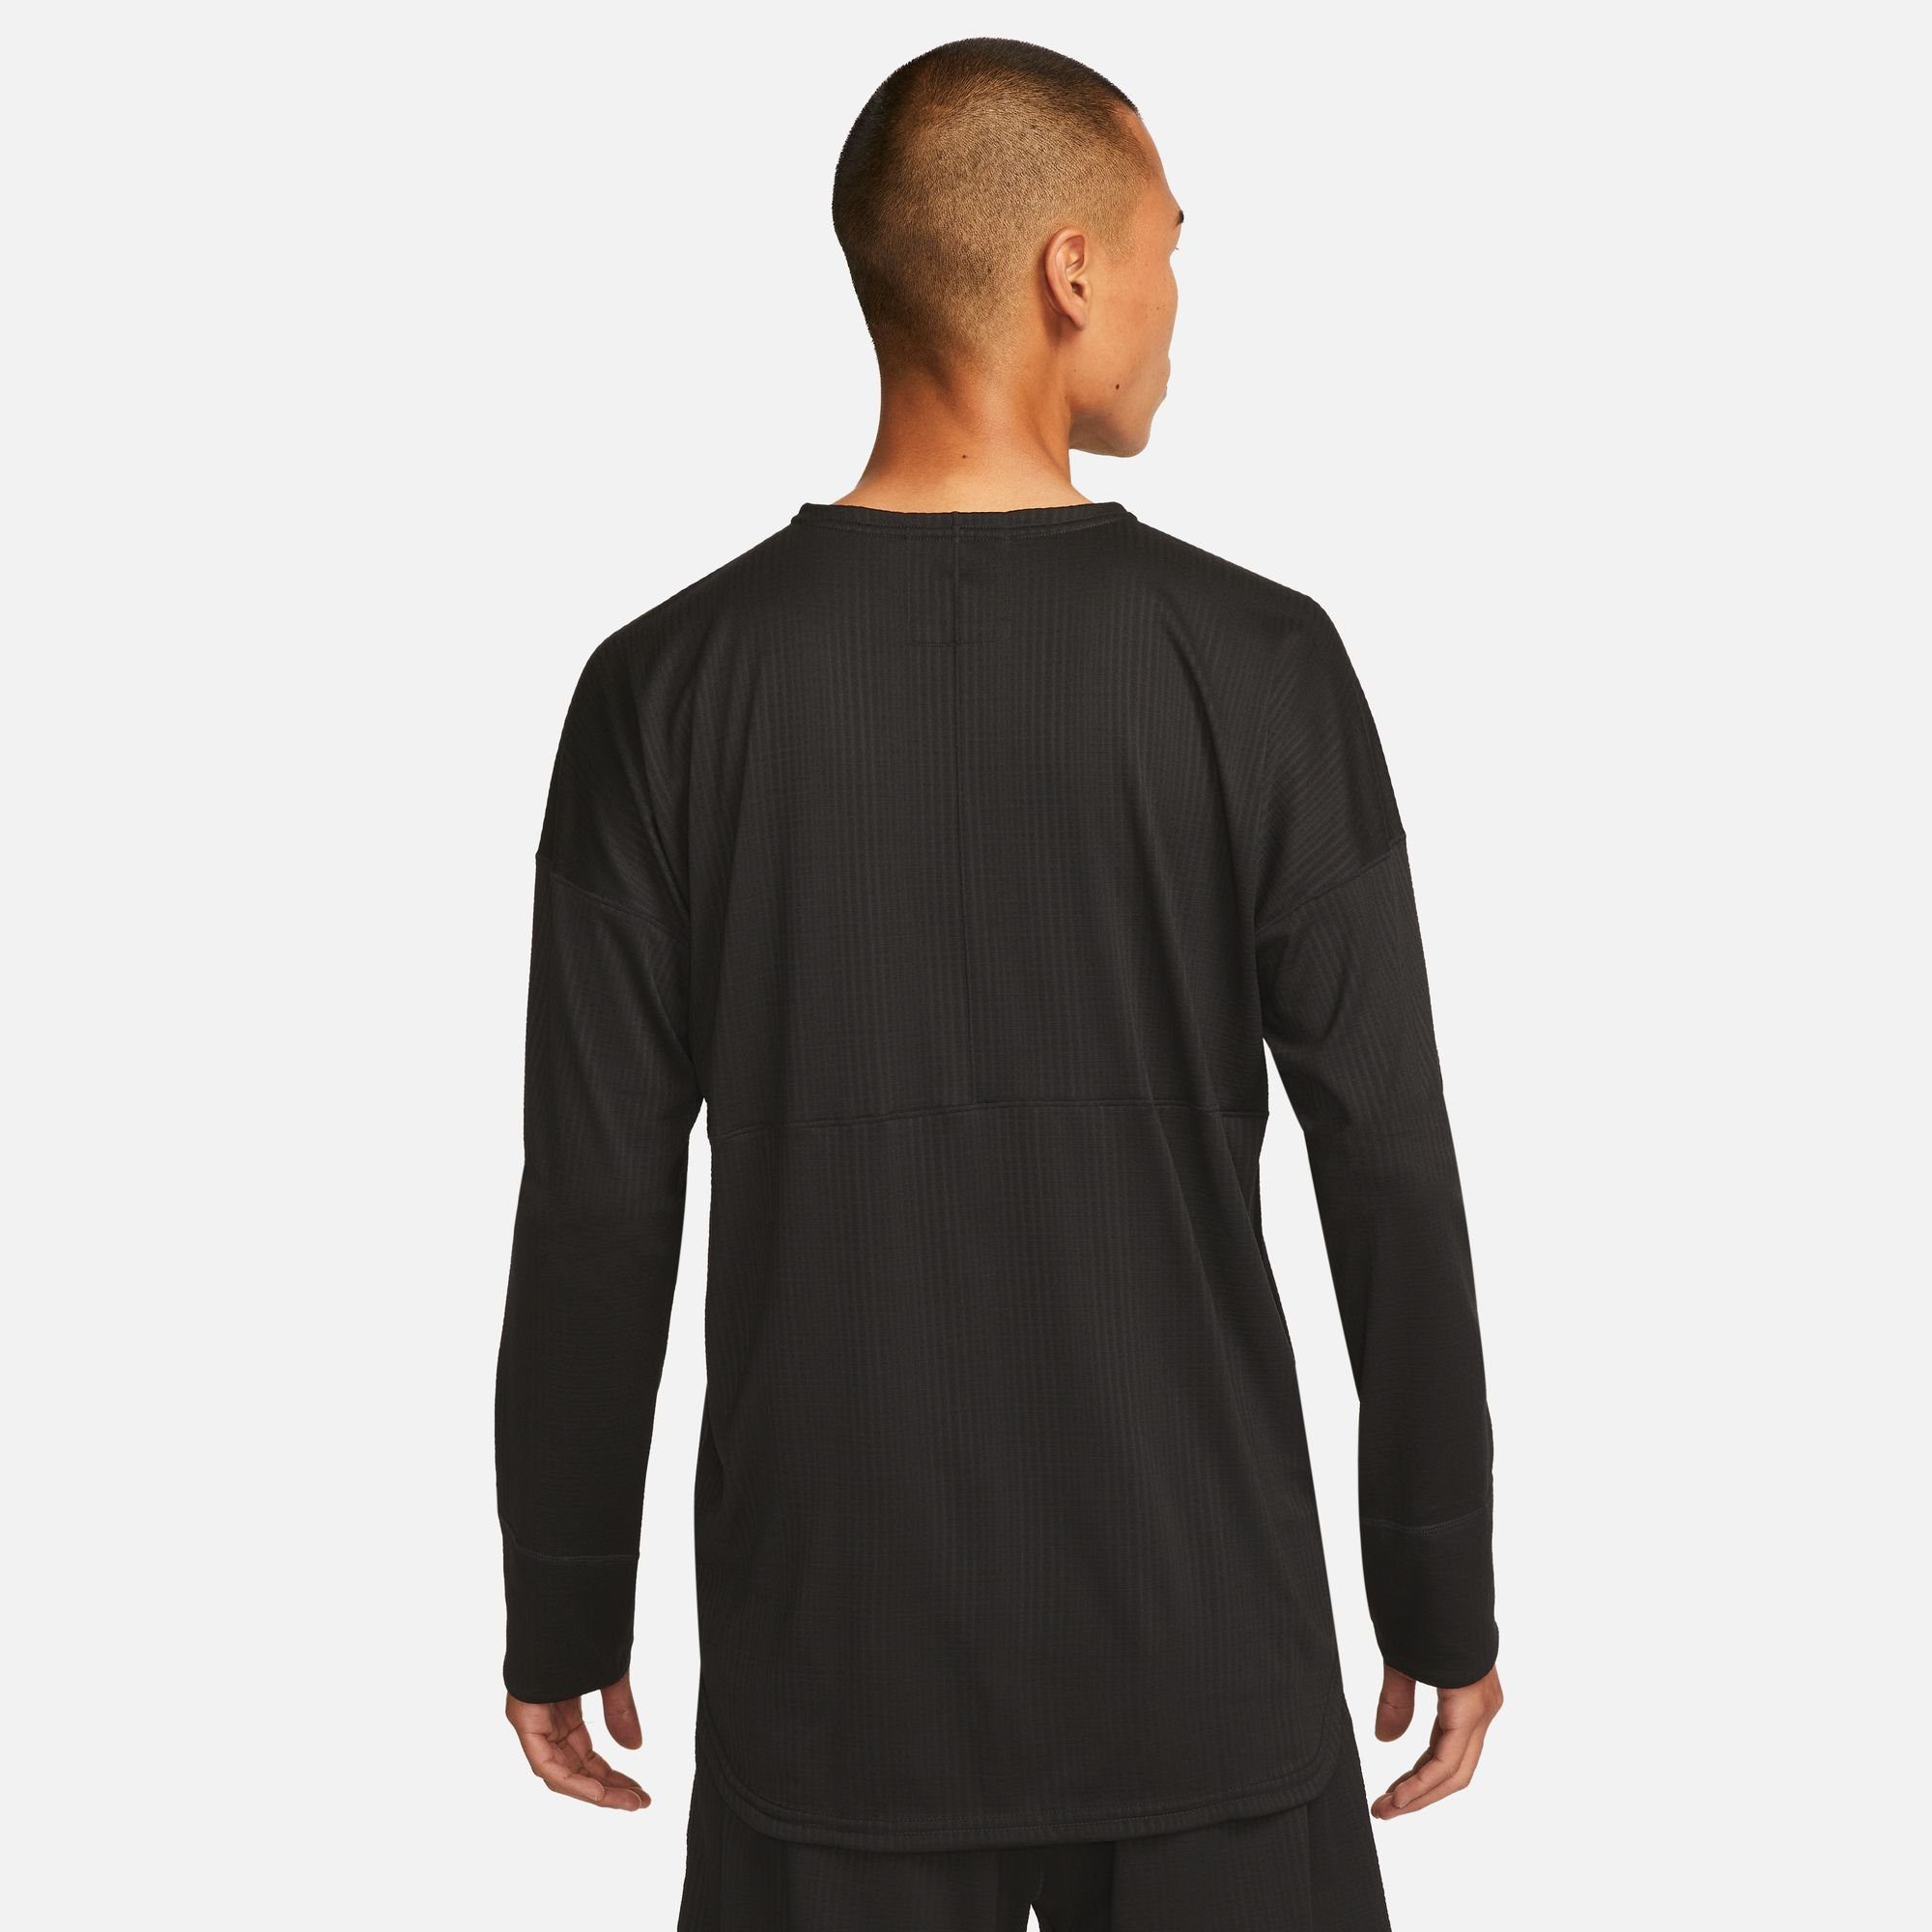 Yogashirt DRI-FIT CREW YOGA MEN'S JERSEY Nike